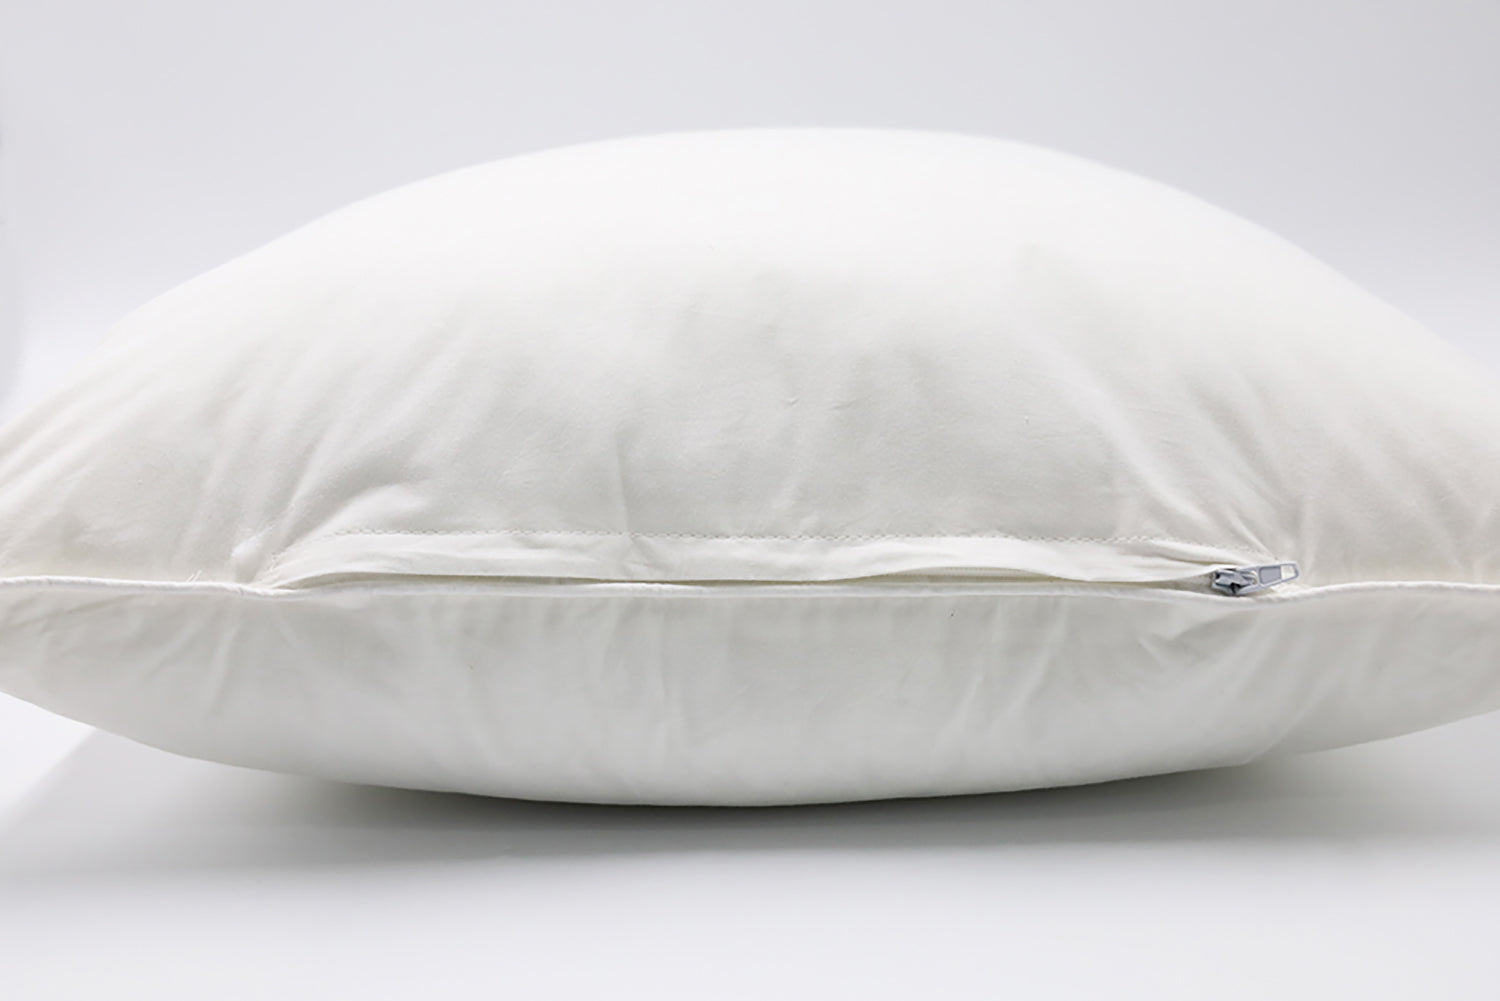 Down Alternative Pillow - 2 Pack Set - Organic Textiles